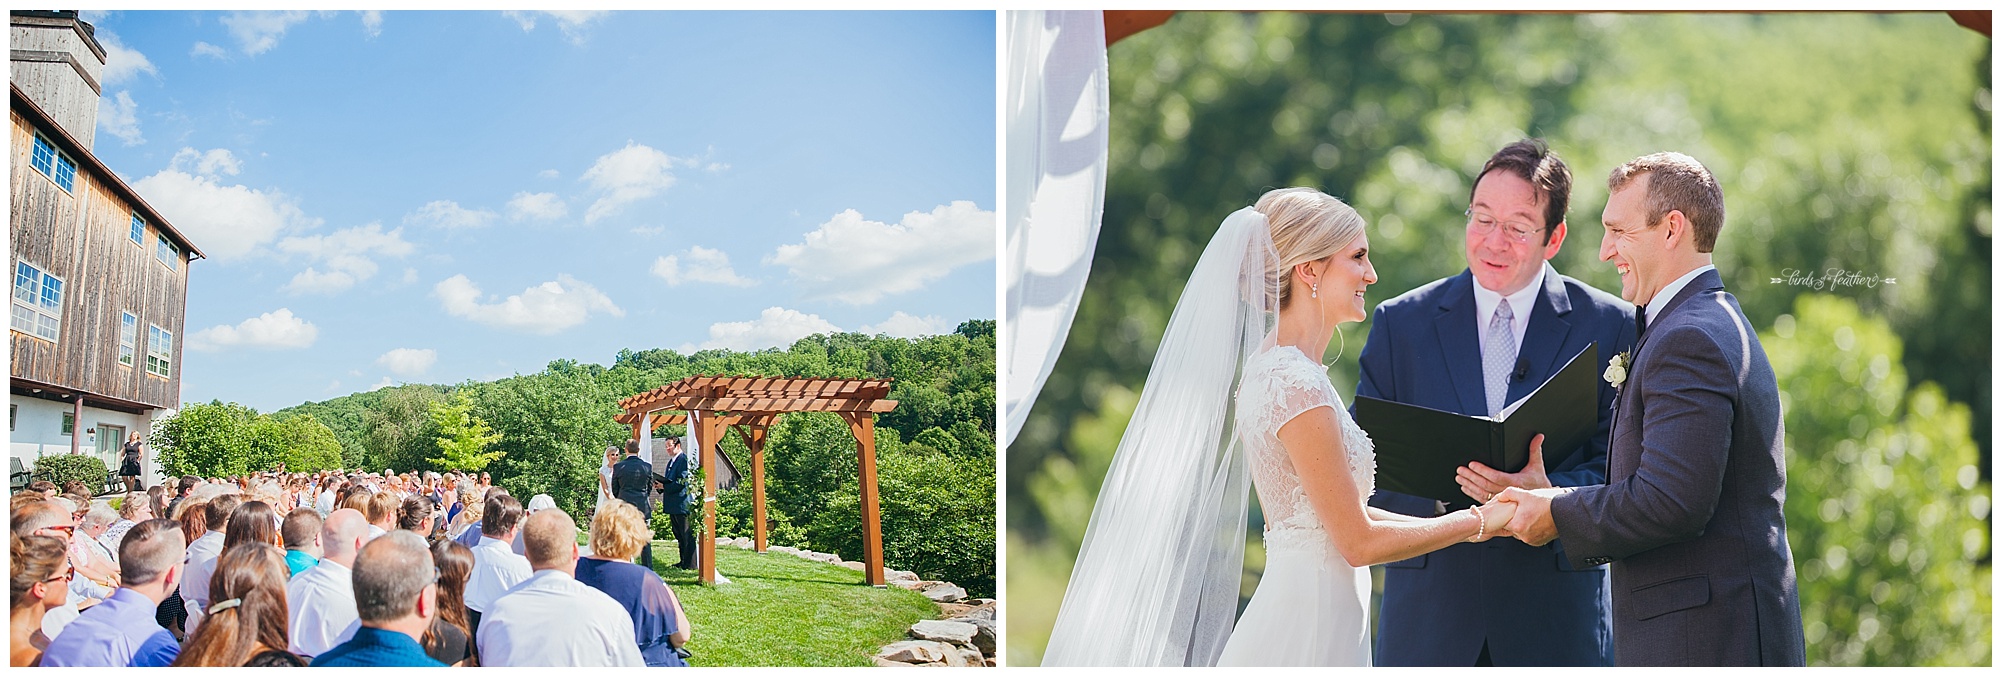 Birds of a Feather Photography, Glasbern Inn Wedding, Fogelsville Pa, Wedding Photography, Wedding Photographer